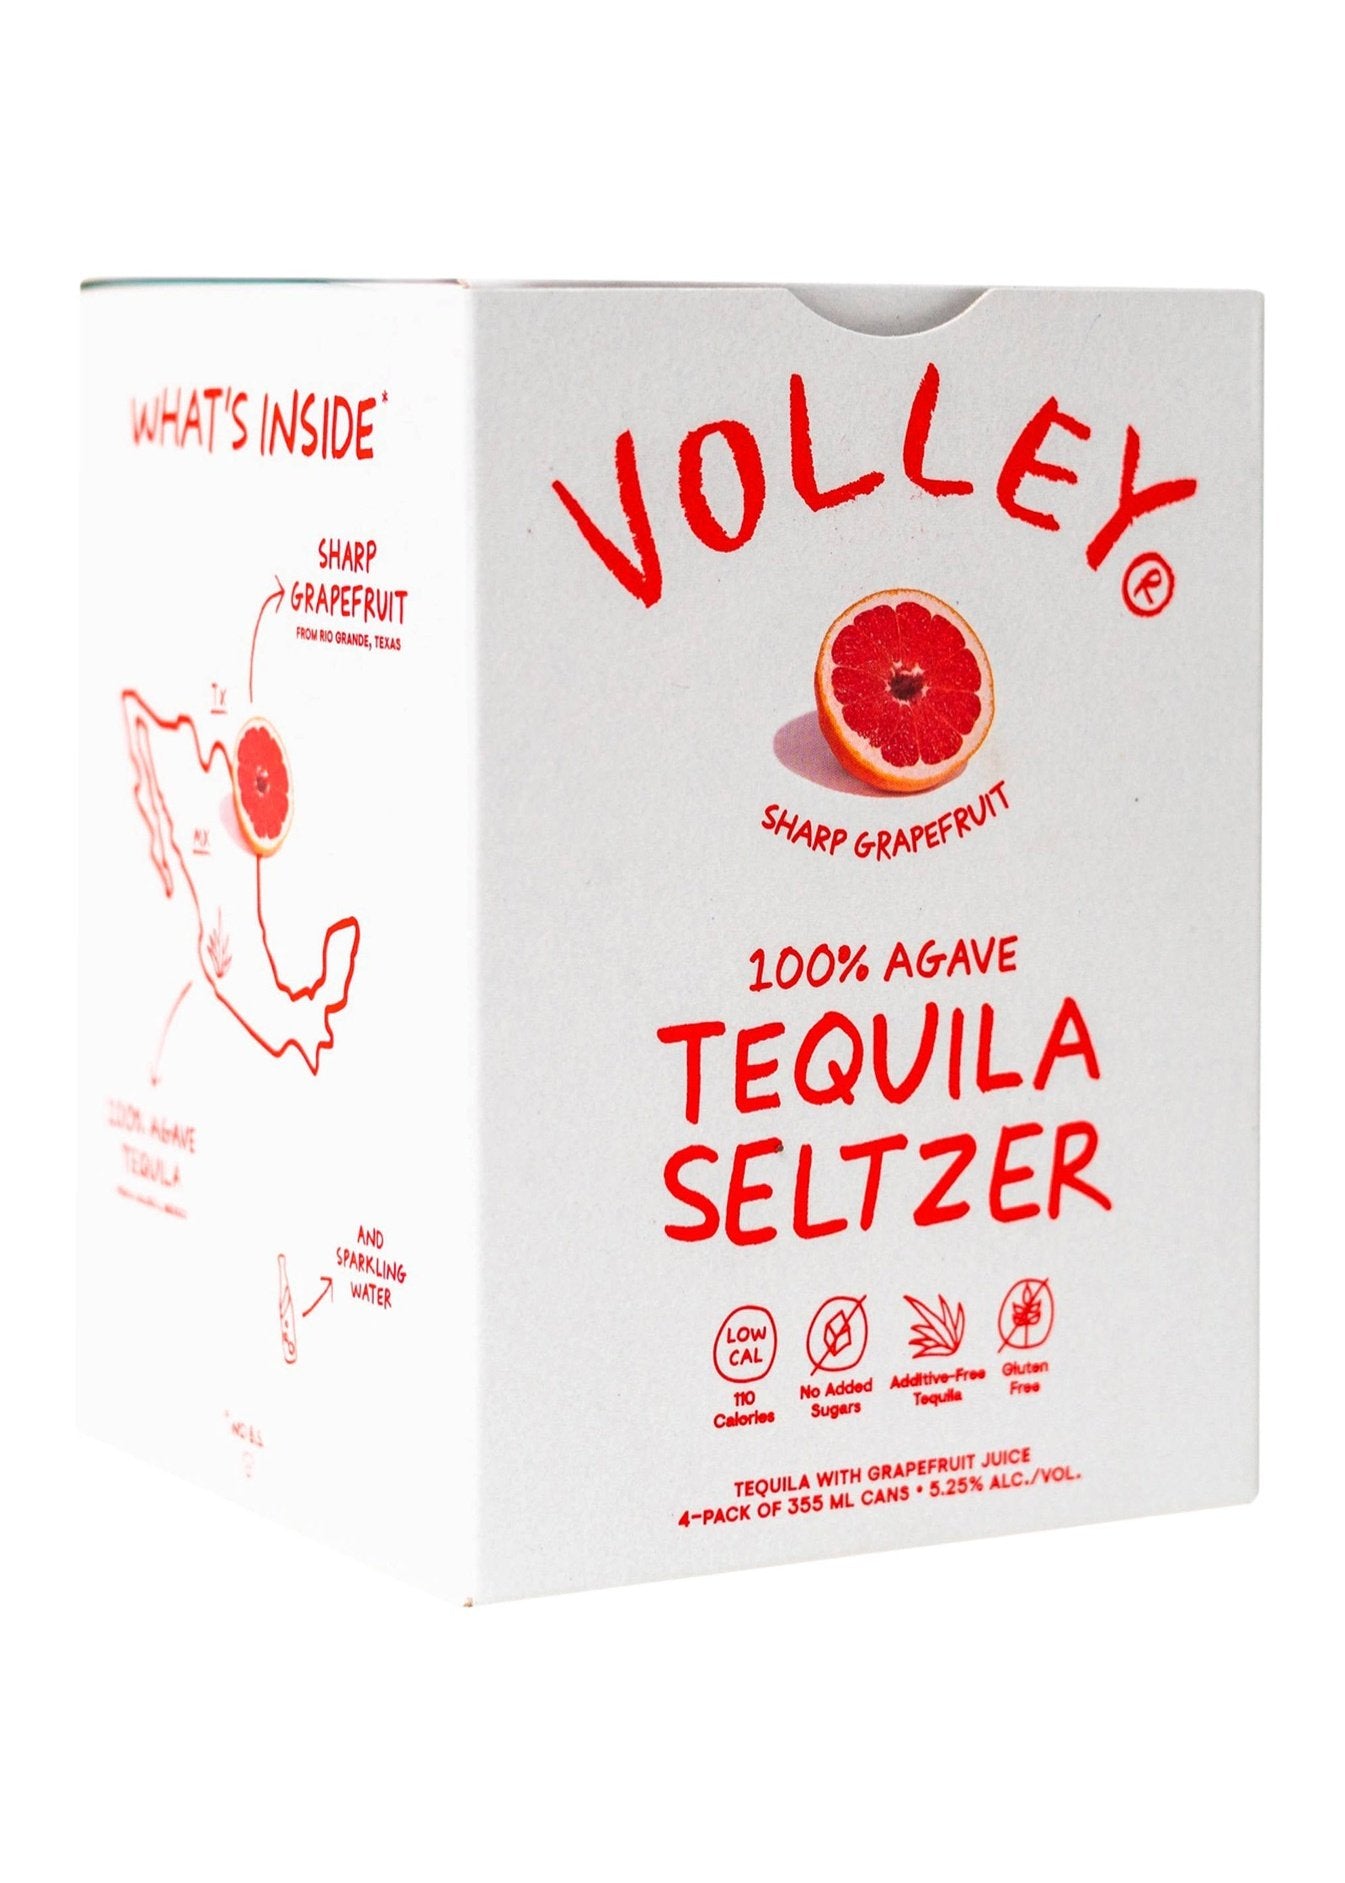 VOLLEY TEQUILA SELTZER Sharp Grapefruit 4PK